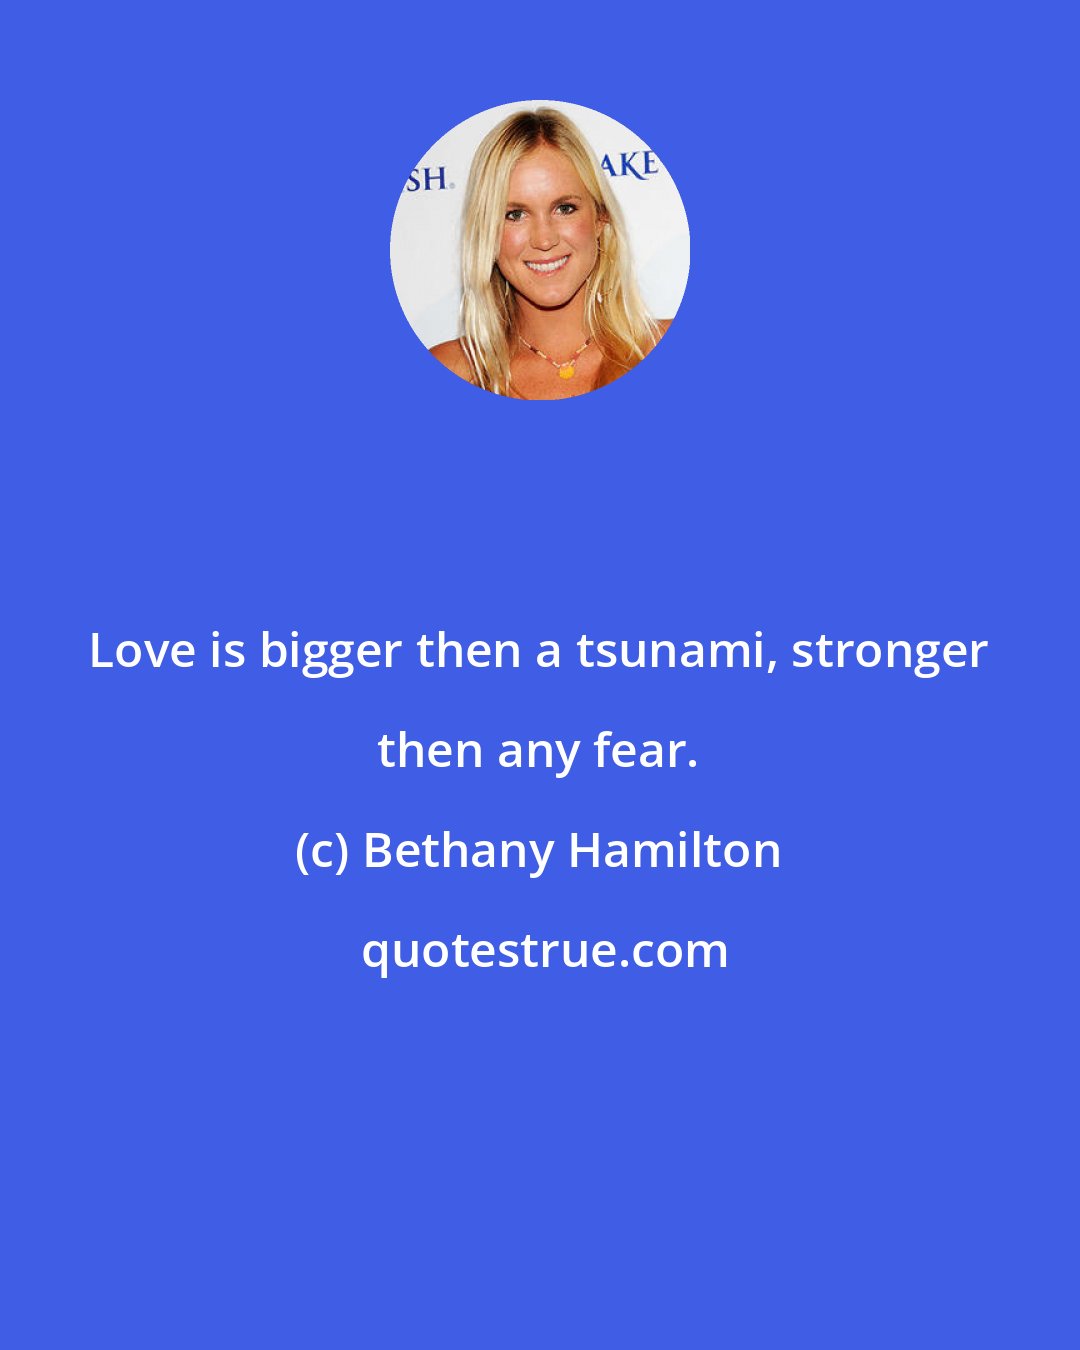 Bethany Hamilton: Love is bigger then a tsunami, stronger then any fear.